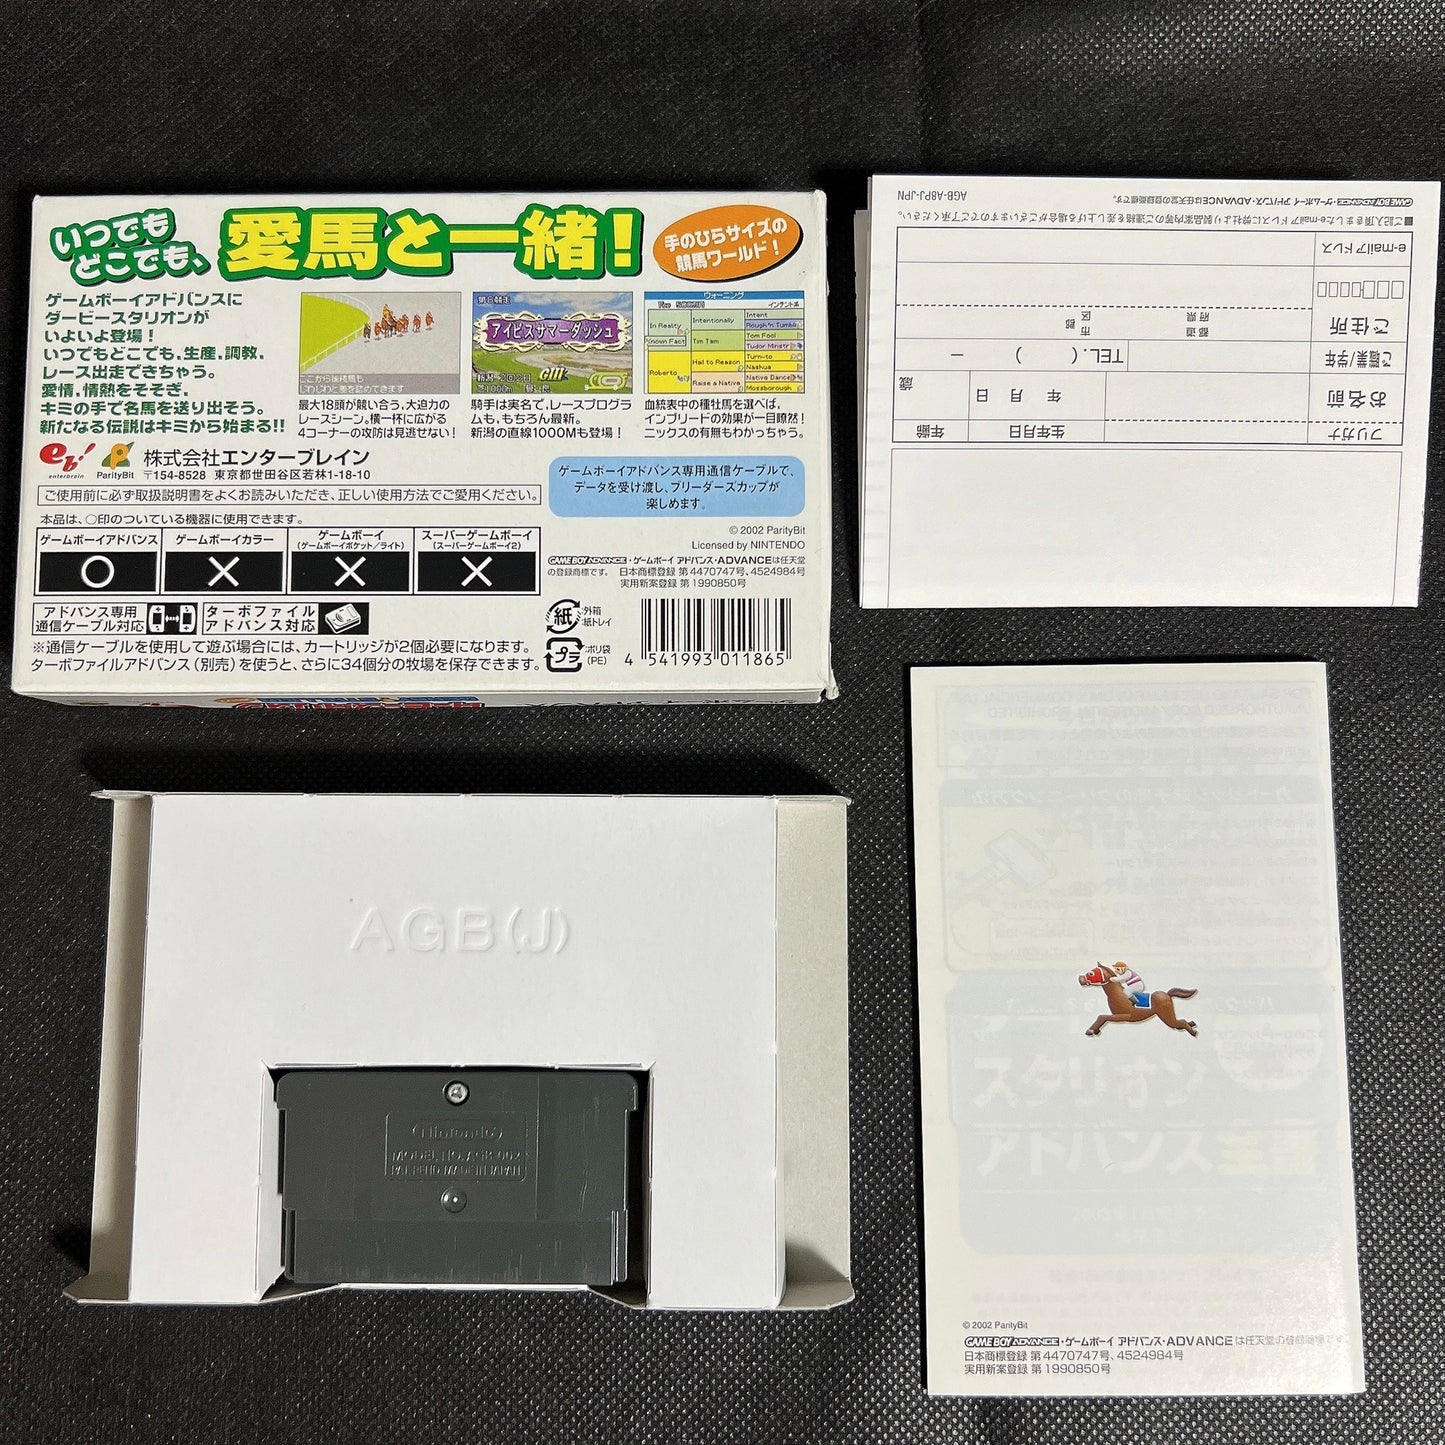 Wholesale lots of 13 Nintendo Gameboy, Advance GB, GBA Game Cartridge set-f0604-